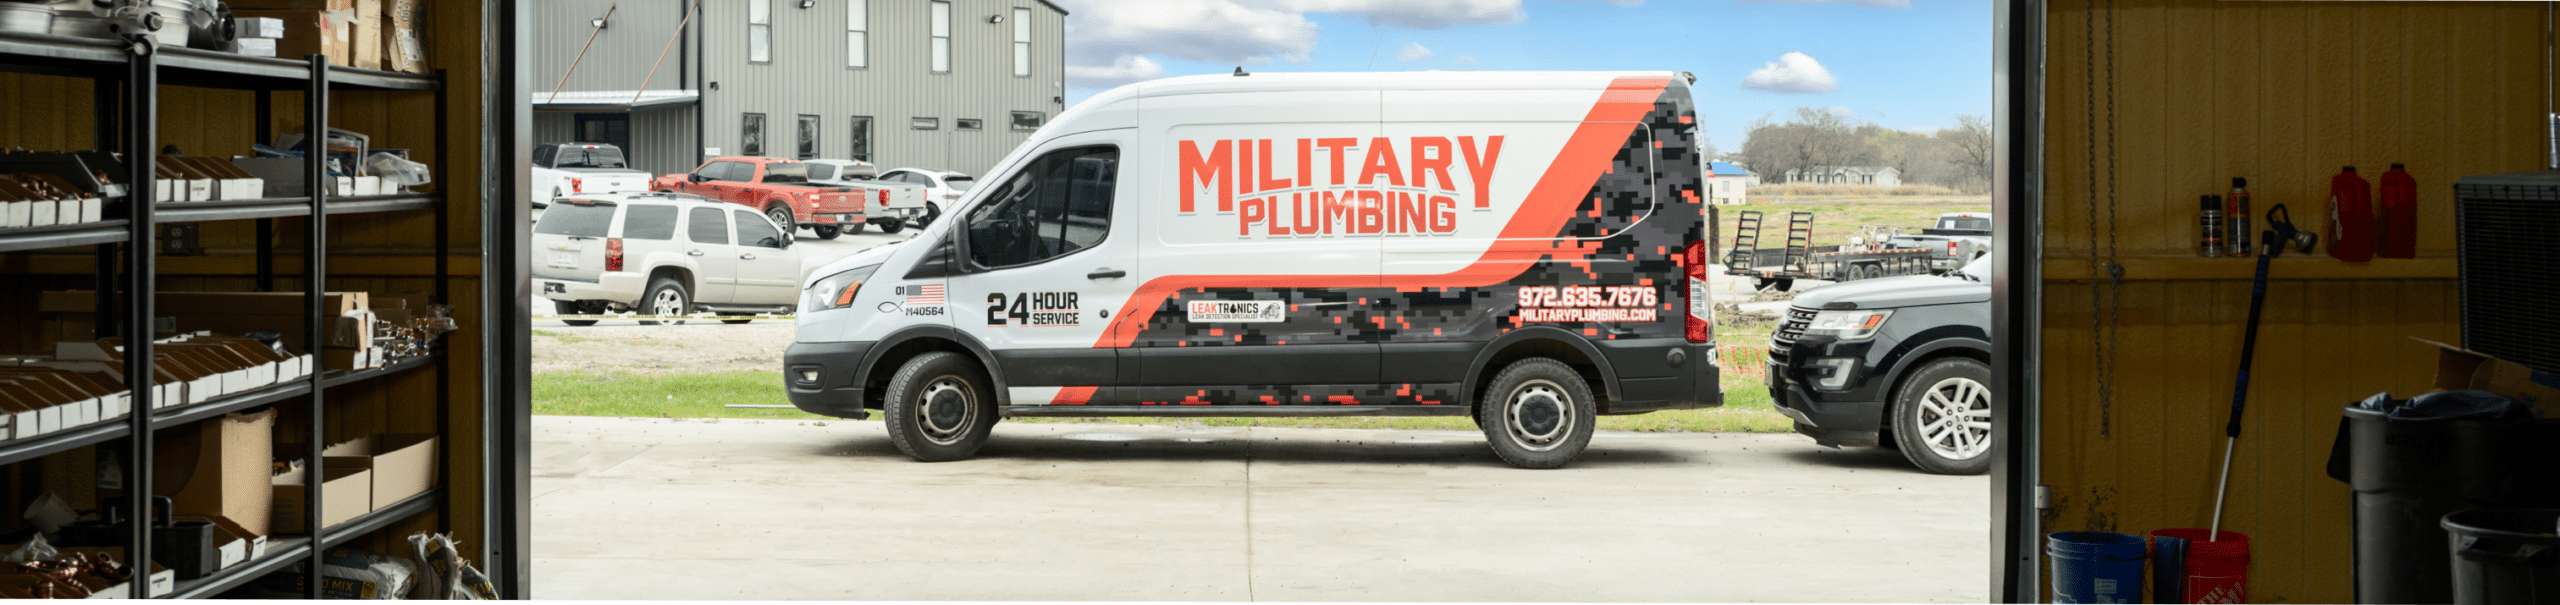 Caddo Mills Plumbing Service - Military Plumbing